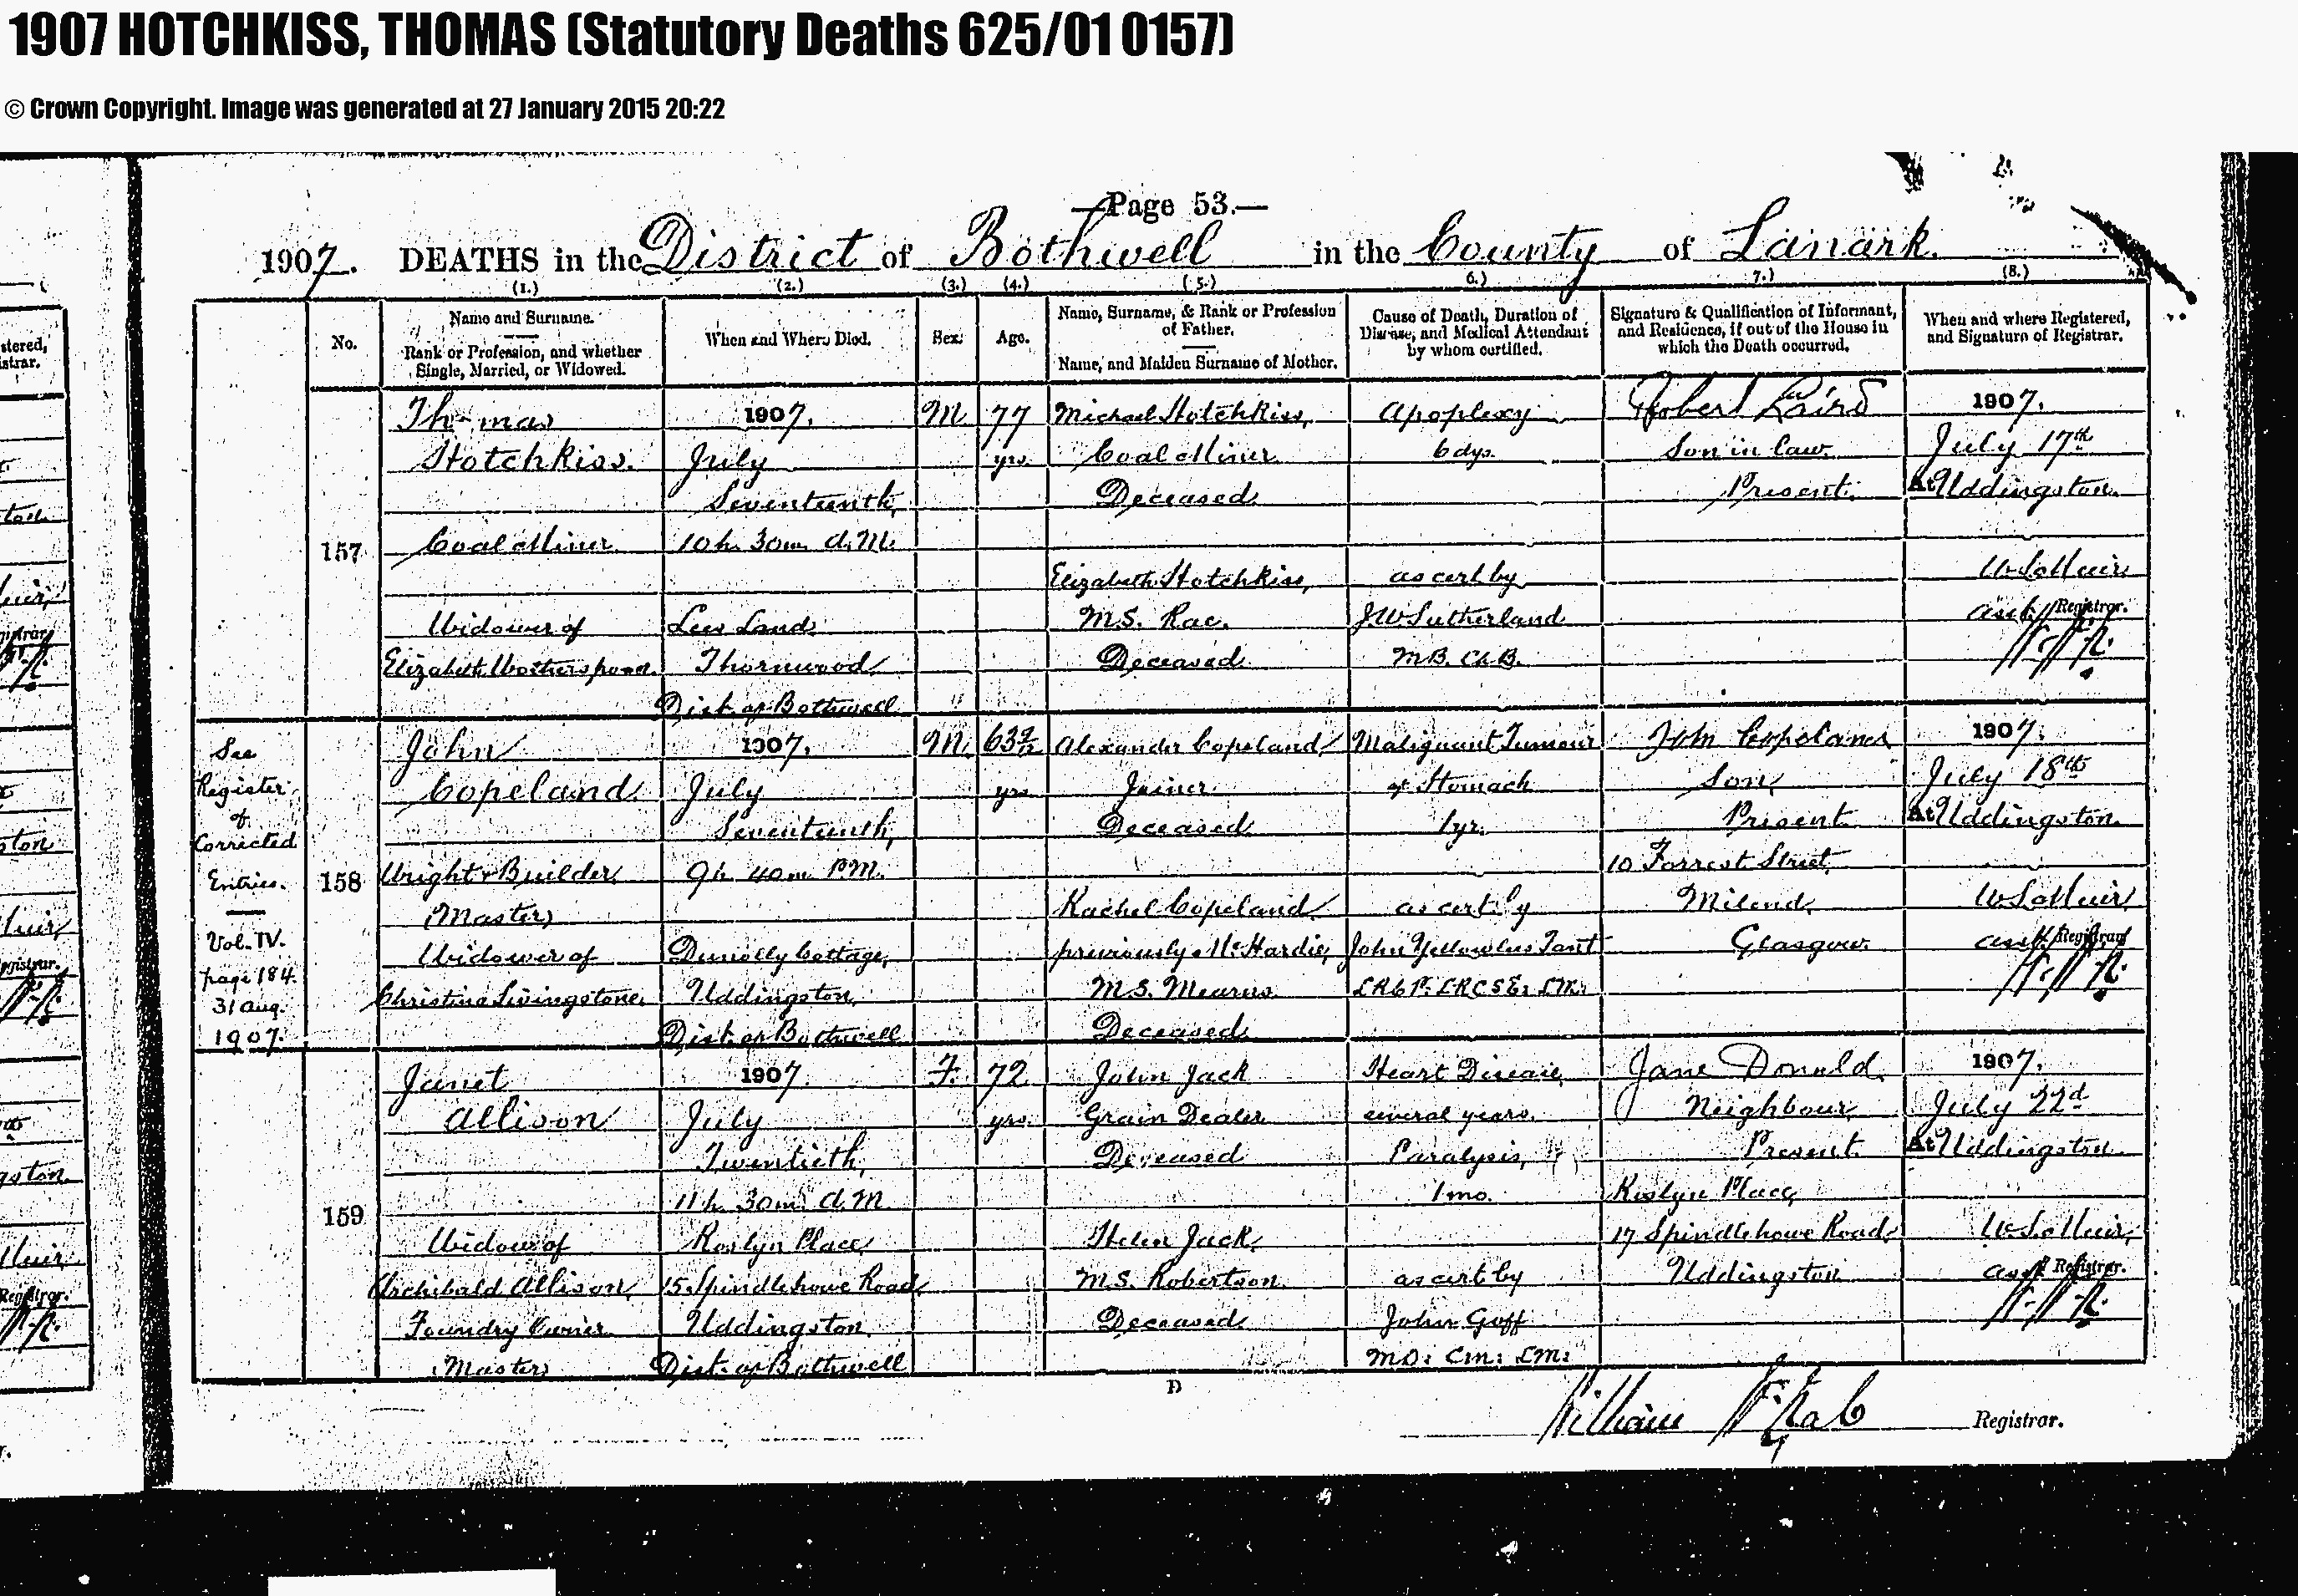 Thomas Hotchkiss Death Register, July 17, 1907, Linked To: <a href='i2526.html' >Michael Hotchkiss</a>